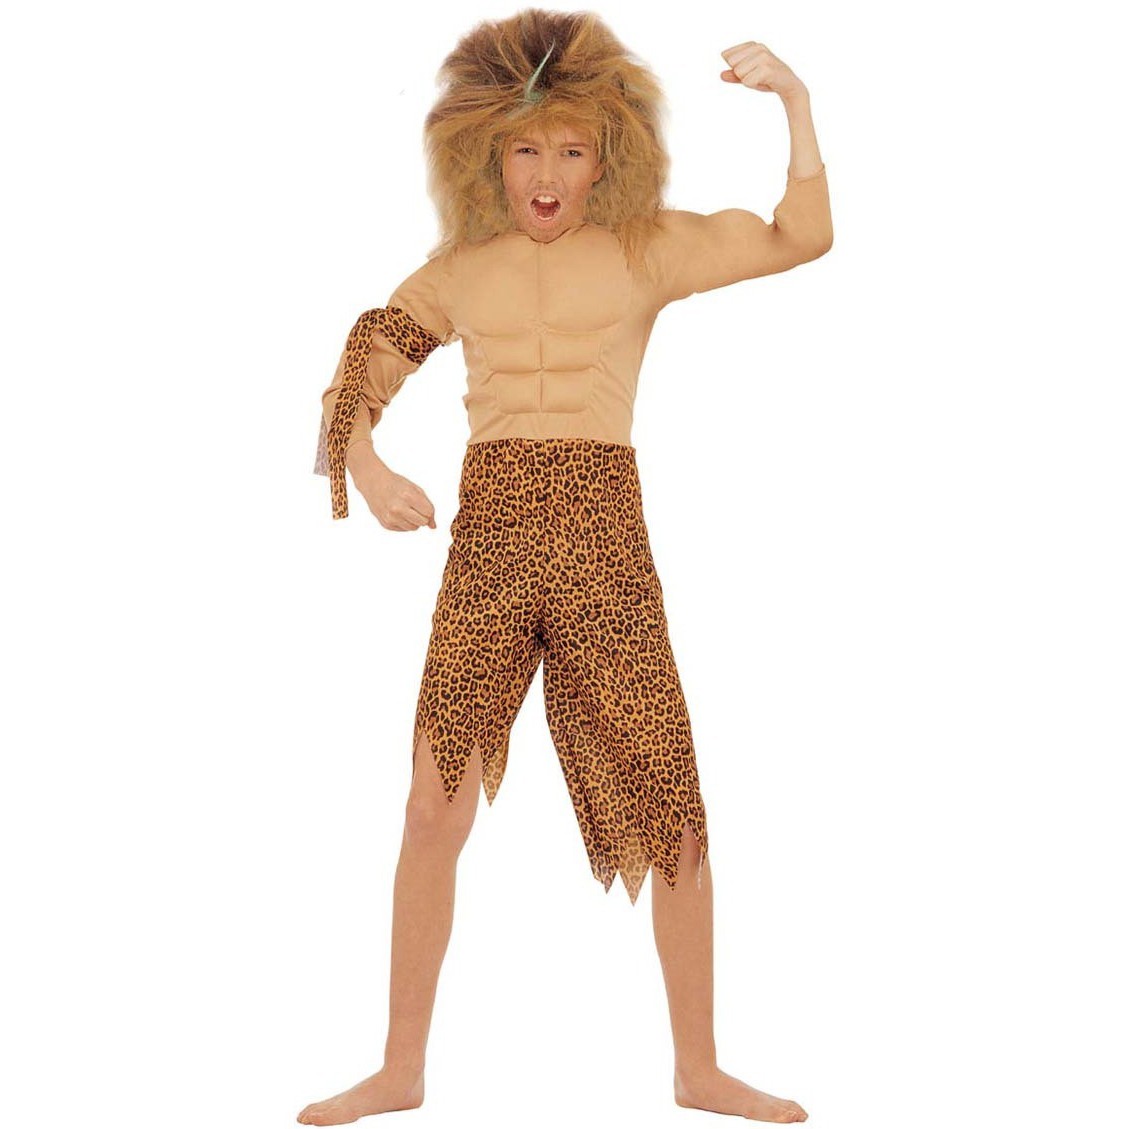 Kostüm Tarzan Jungleman Muskelkostüm Dschungel Urwald Karneval Fasching M 46 48 